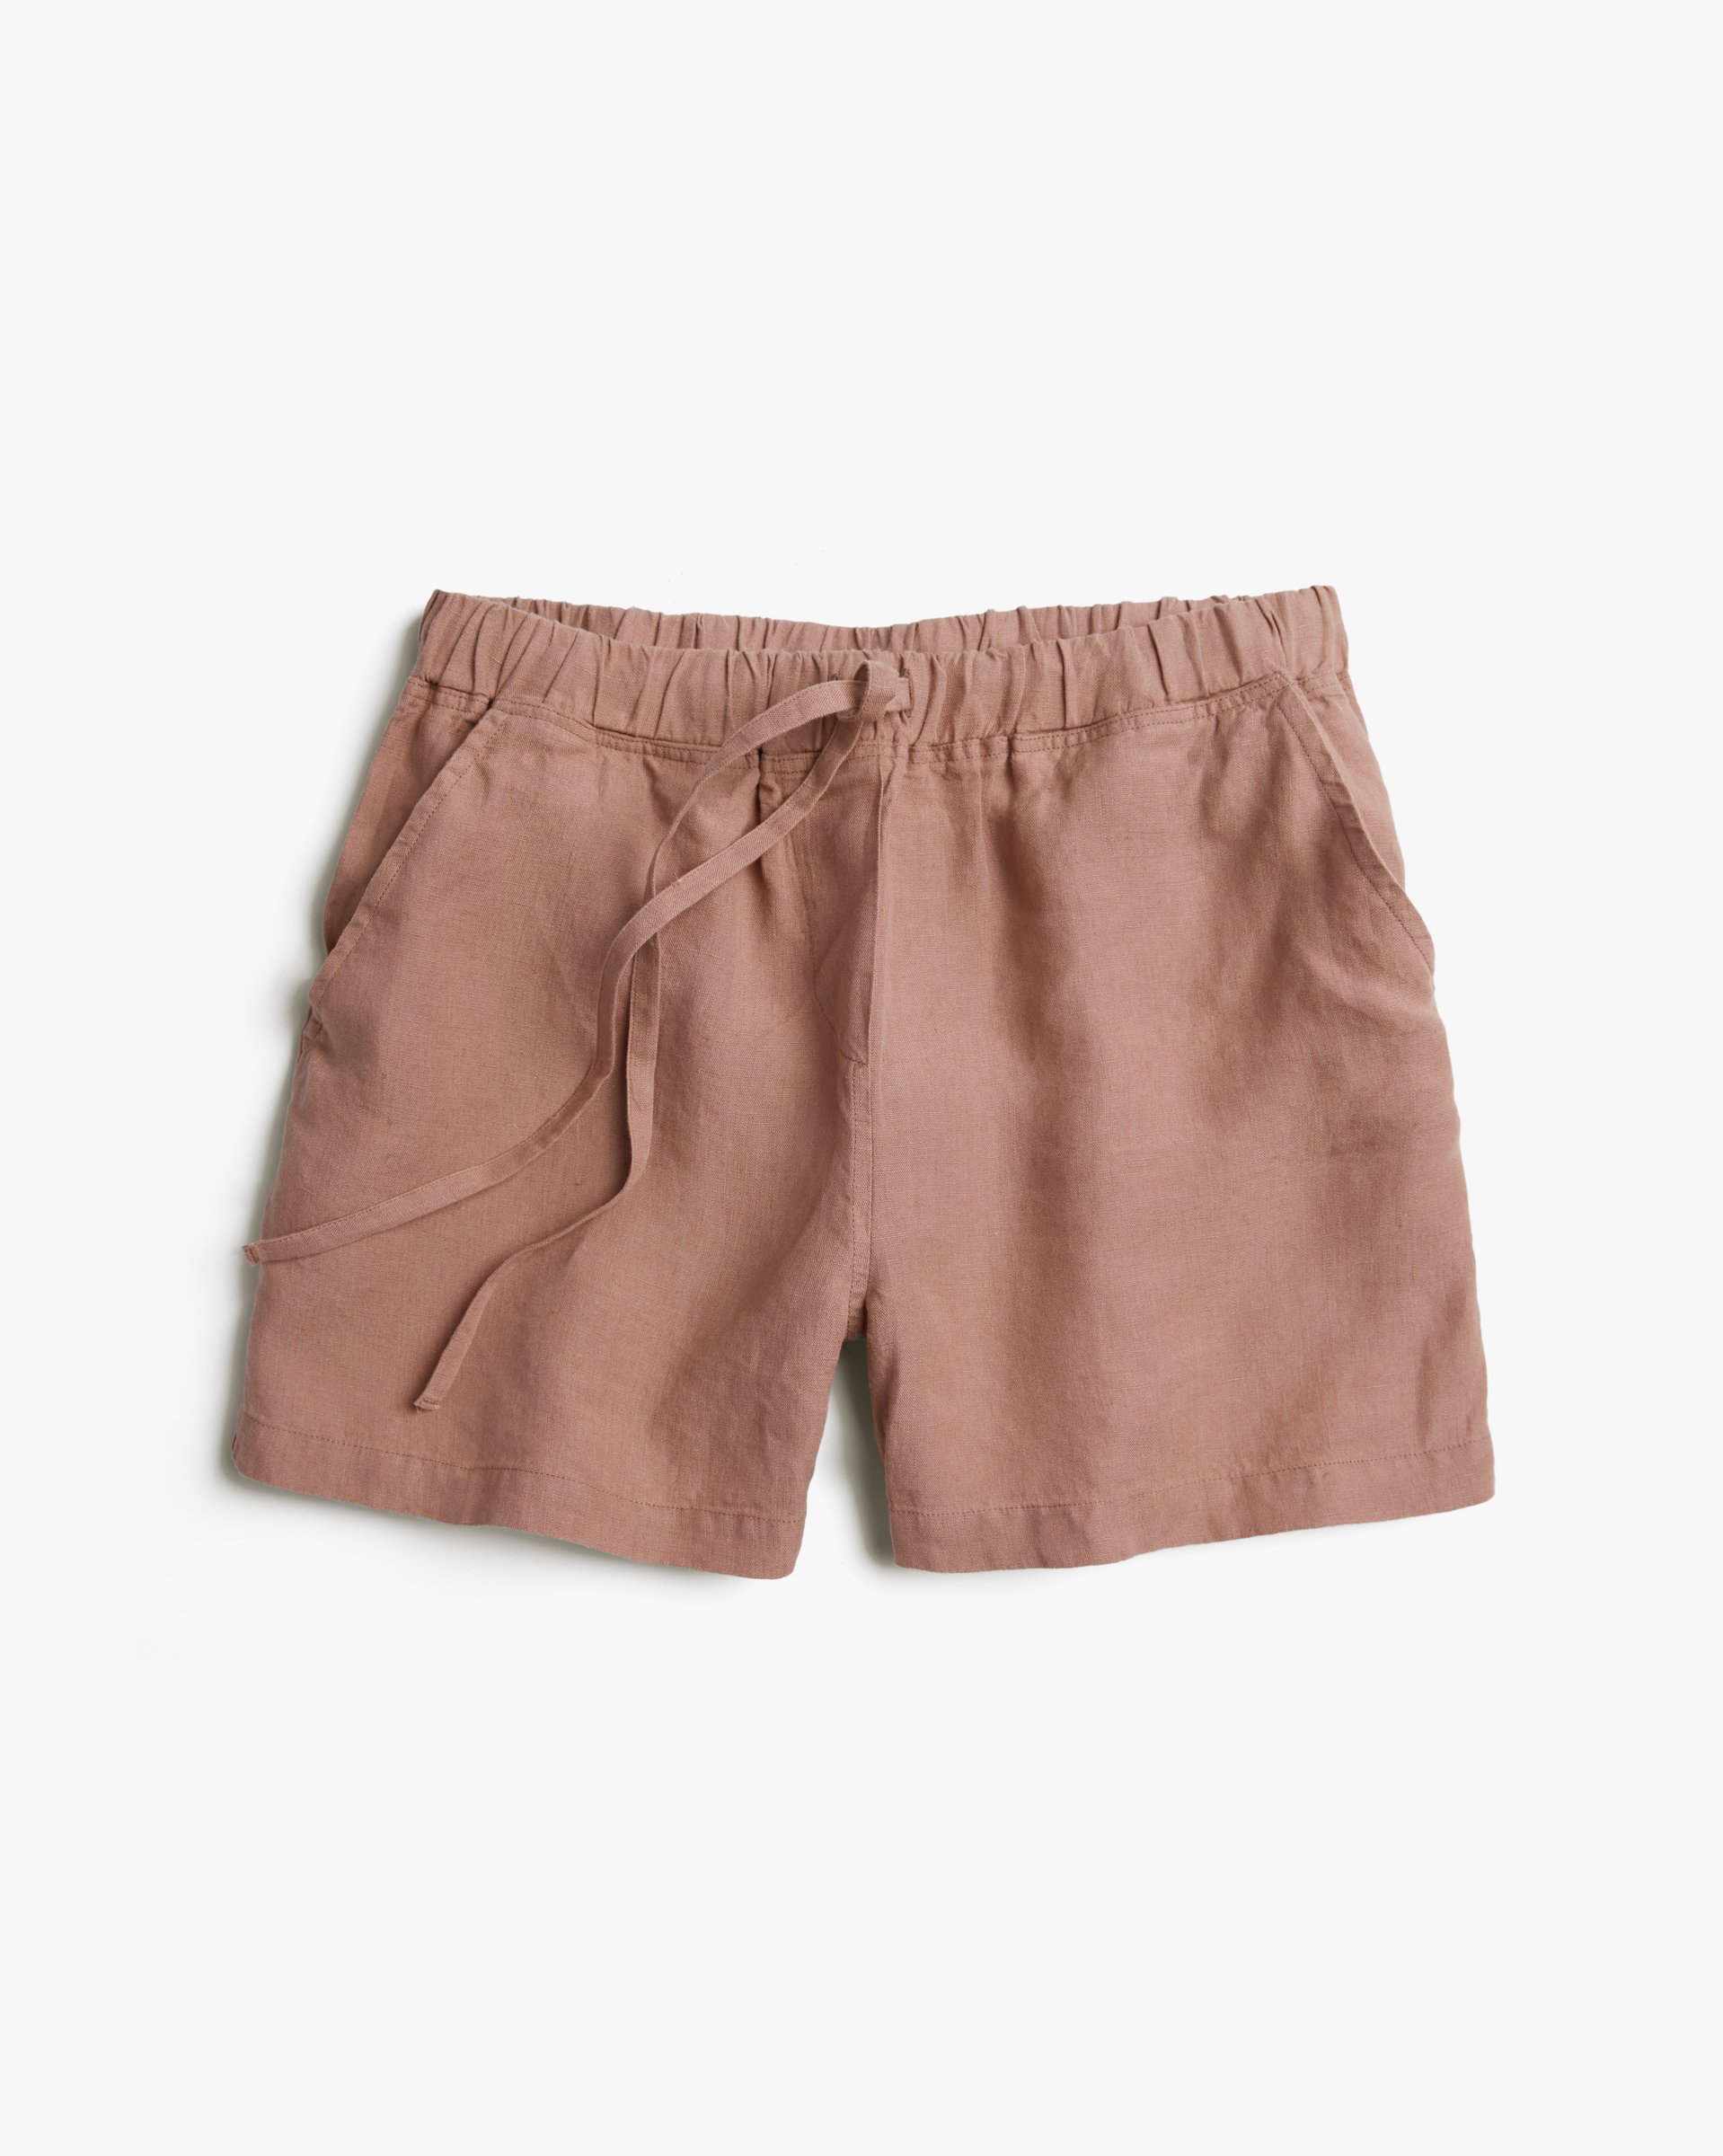 Womens Brown Shorts